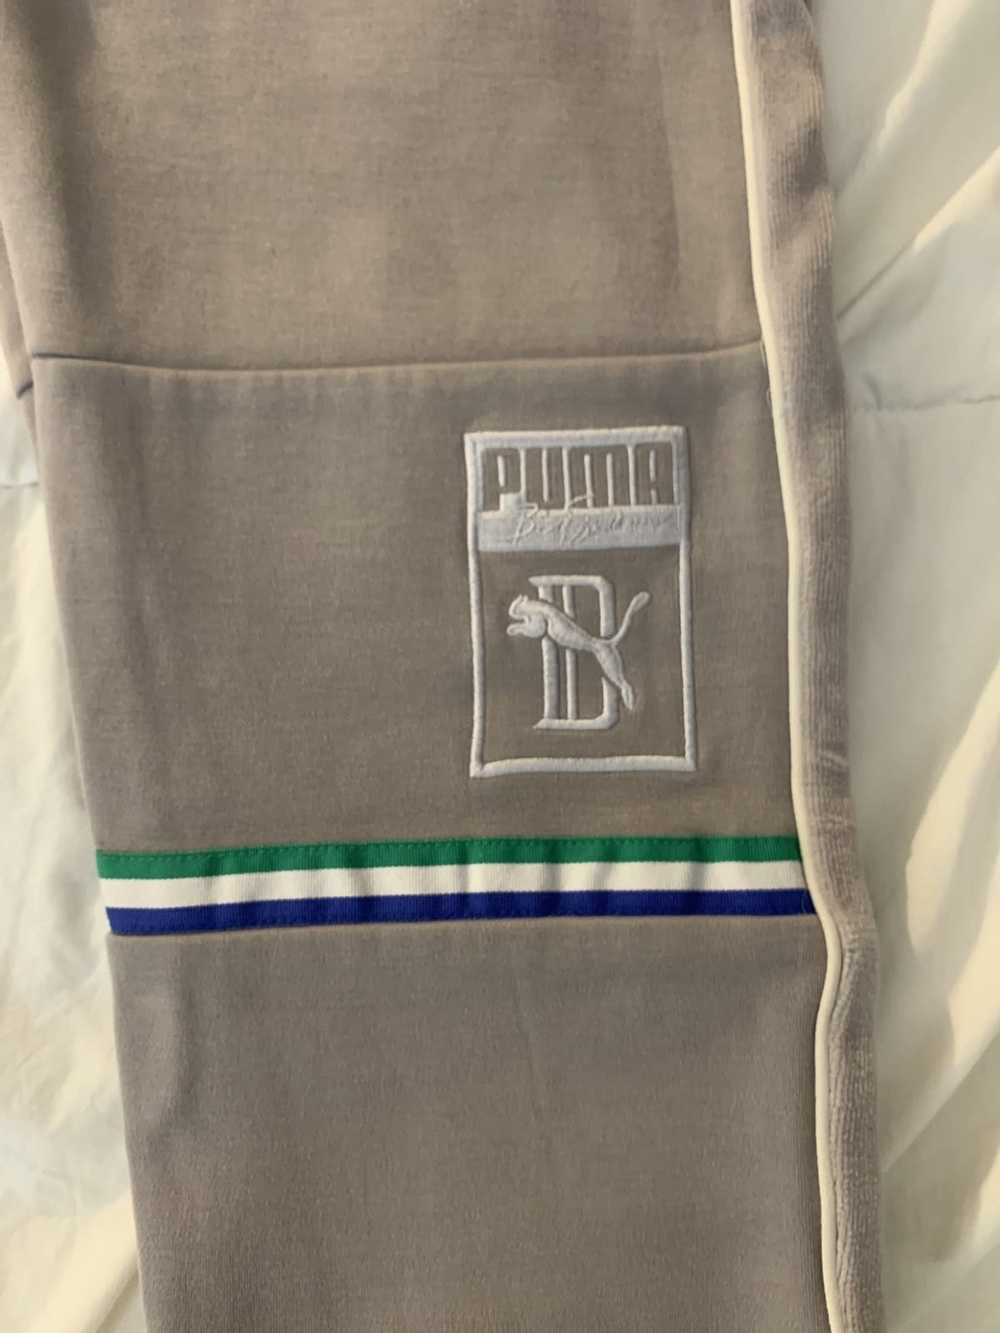 Puma PUMA X Big Sean Joggers - image 3